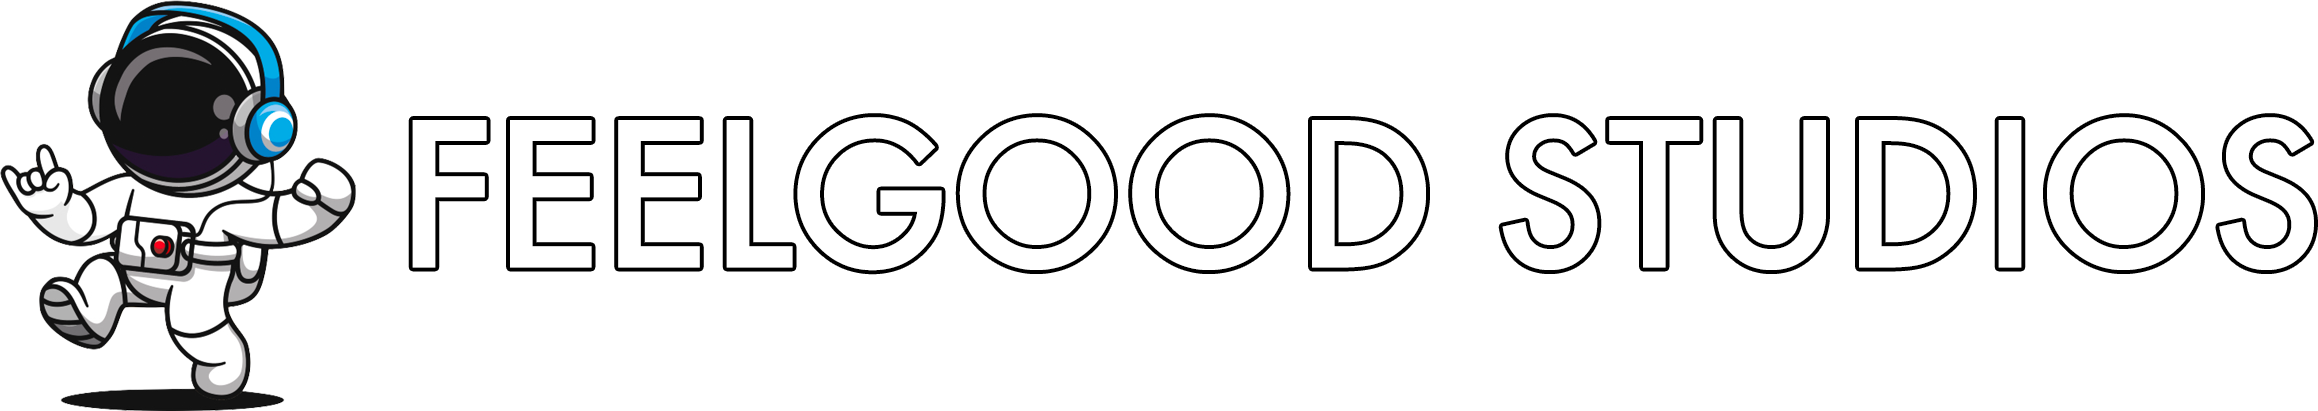 Feel Good Studios - Video & Music Recording Studio